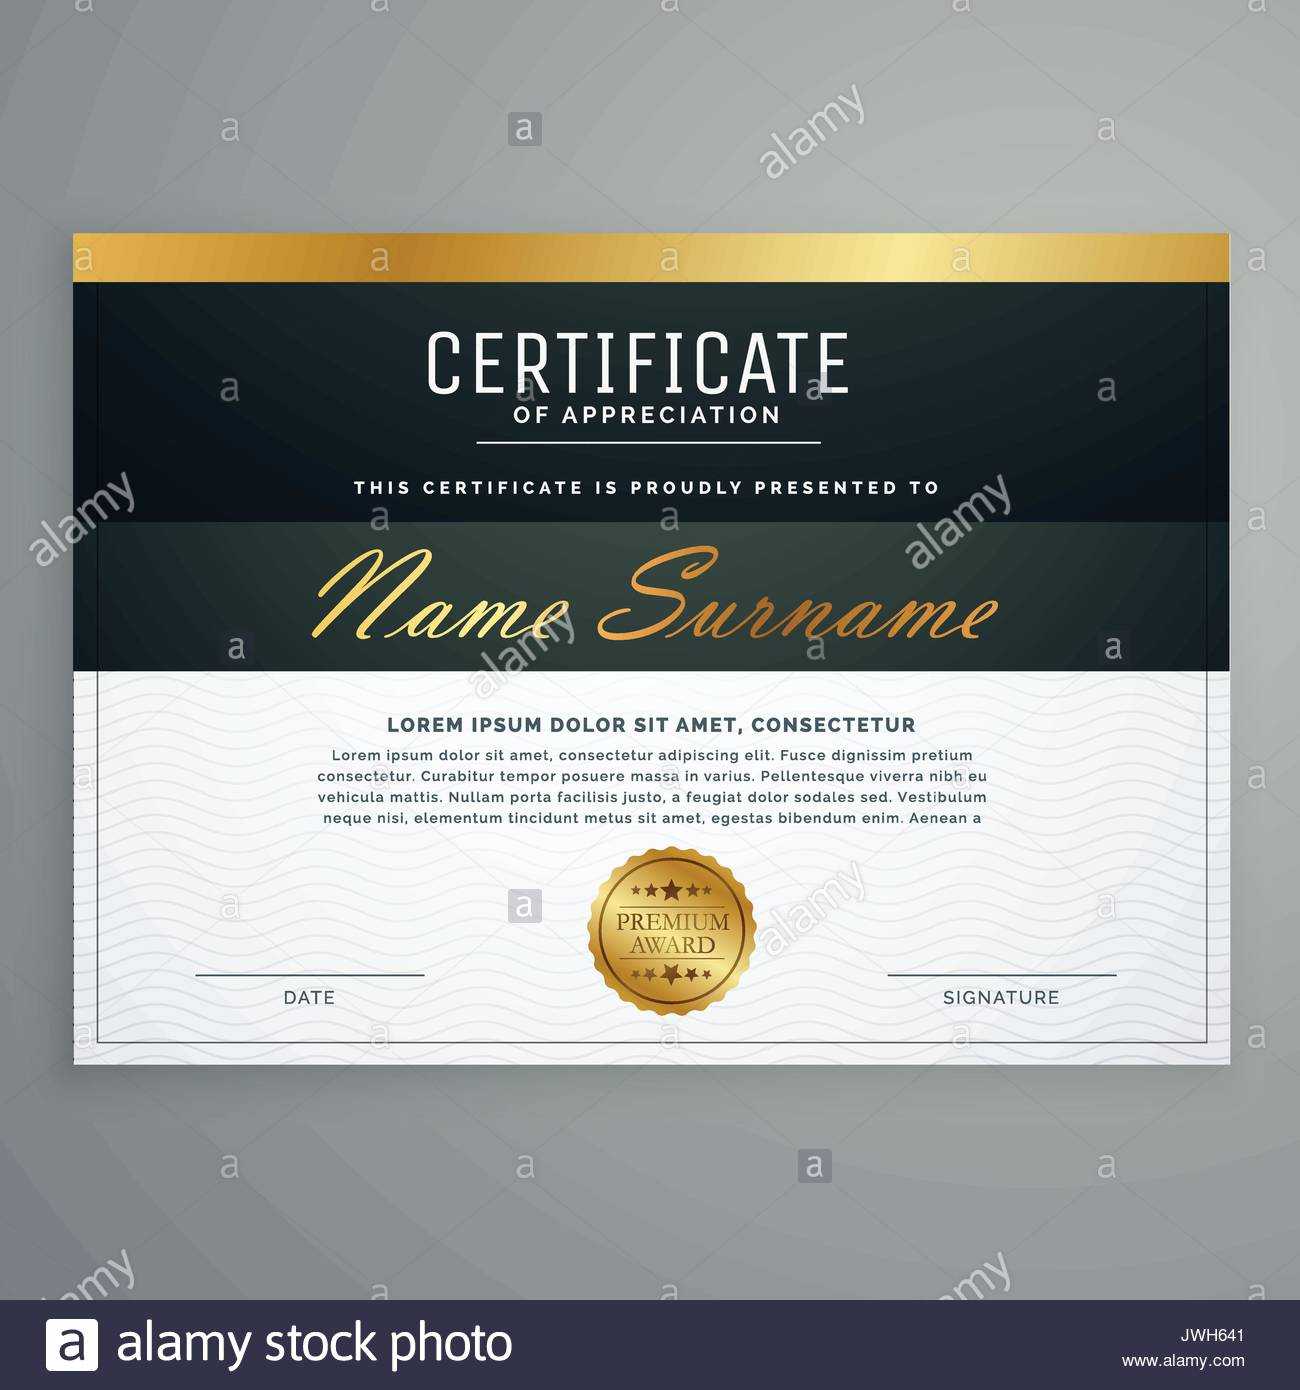 Premium Certificate Design. Diploma Award Vector Template Pertaining To Award Certificate Design Template